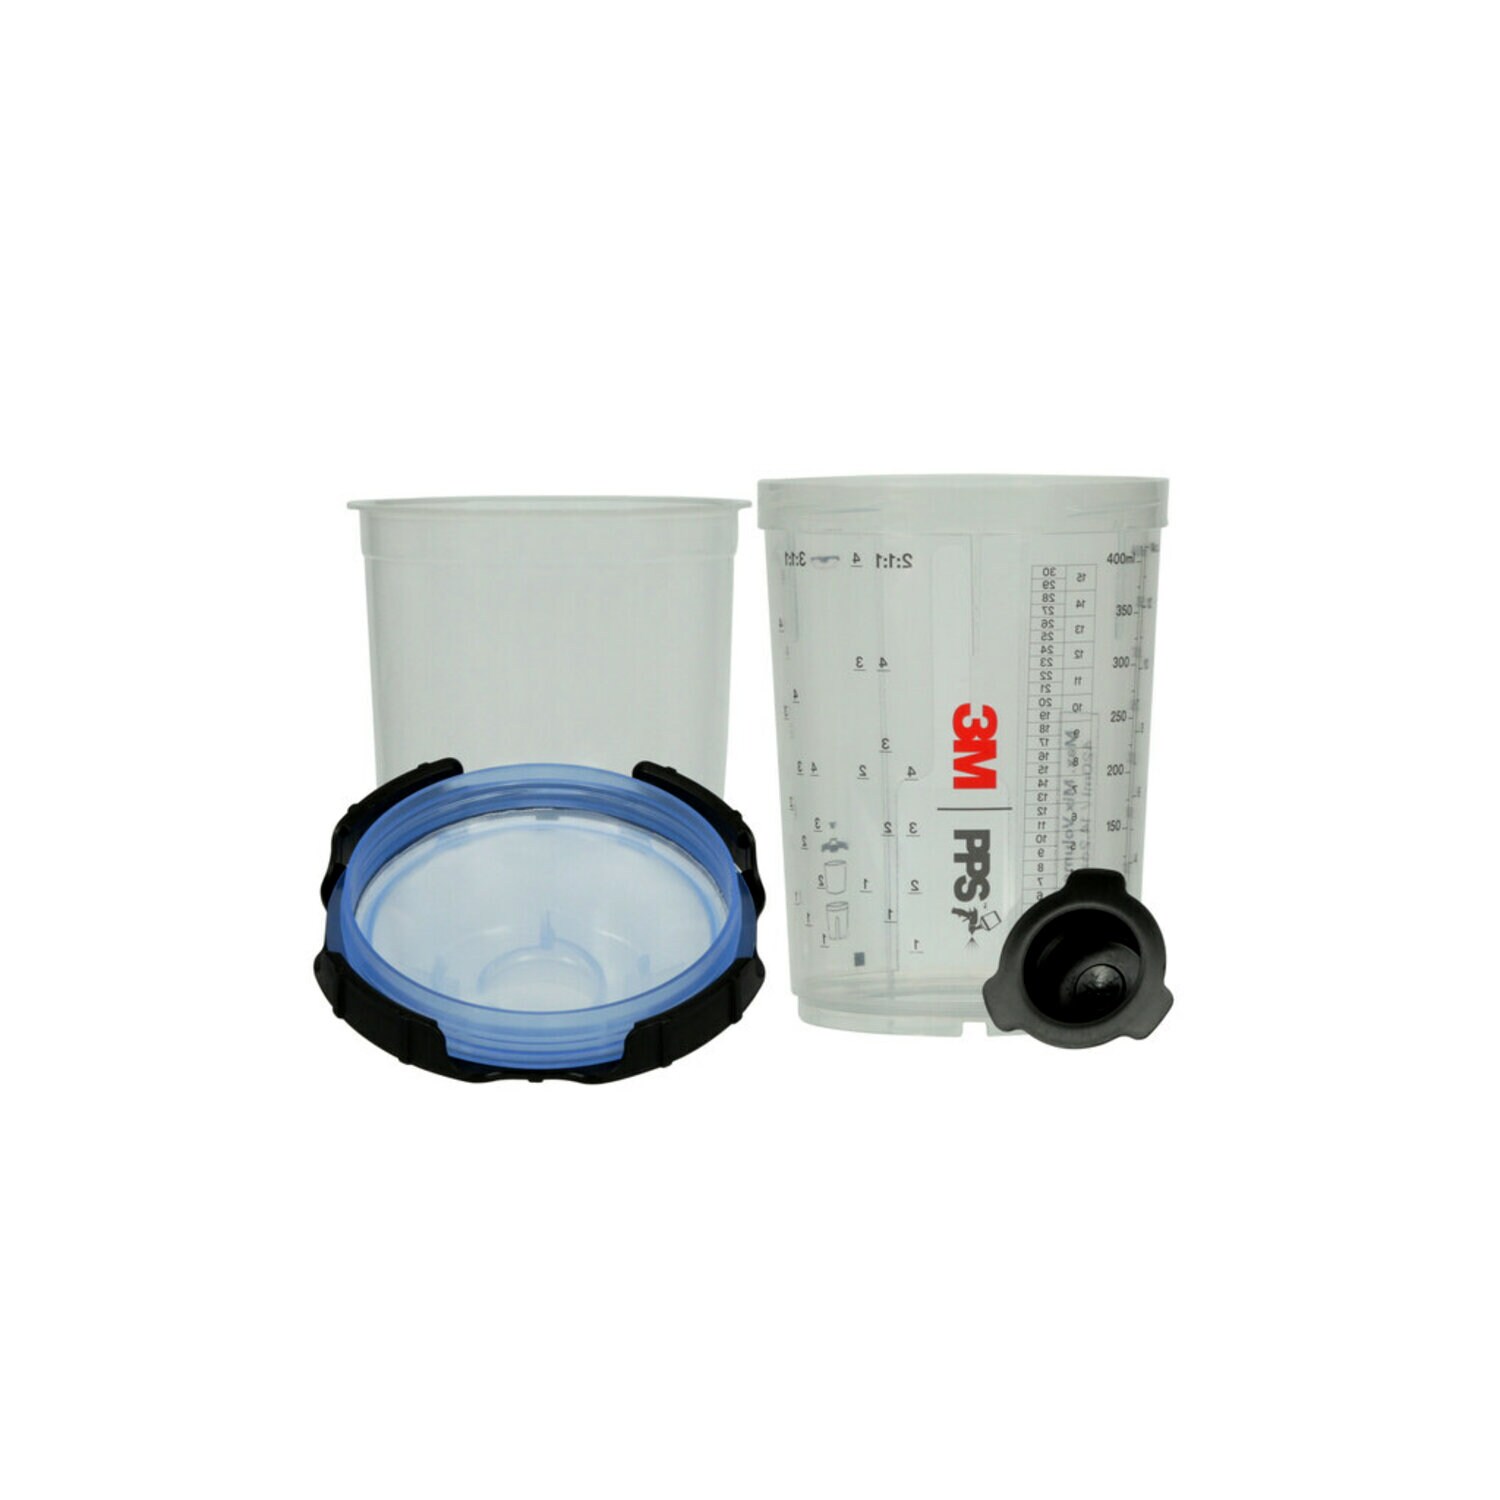 7100134646 - 3M PPS Series 2.0 Spray Cup System Kit, 26312, Midi (13.5 fl oz, 400
mL), 125 Micron Filter, 1 kit per case